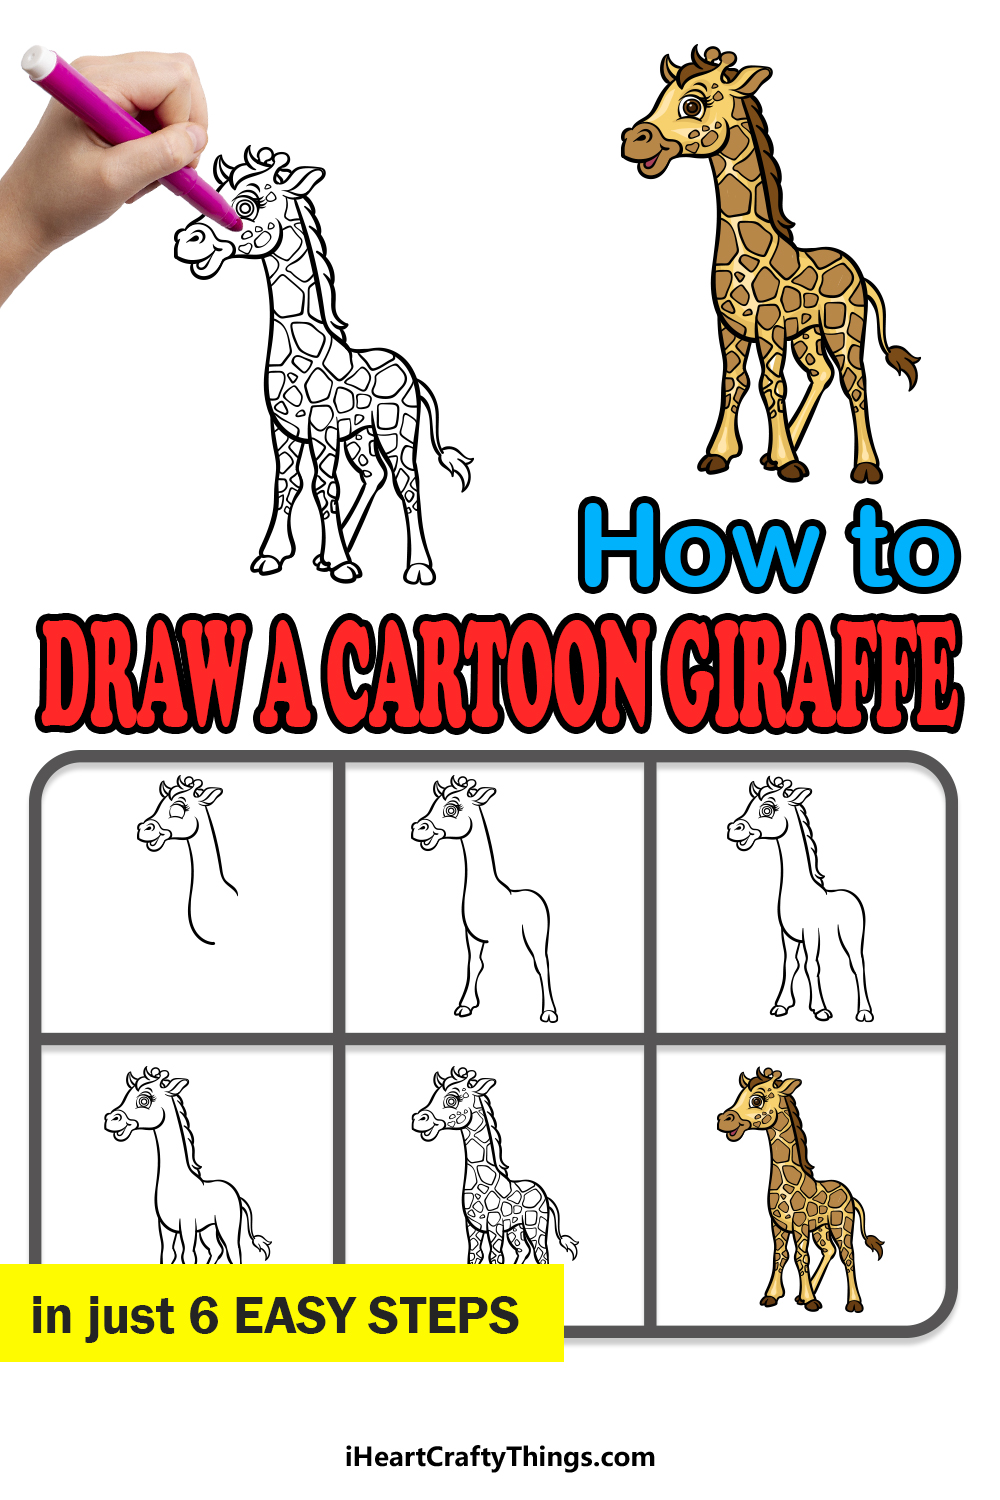 how to draw a cartoon giraffe in 6 easy steps